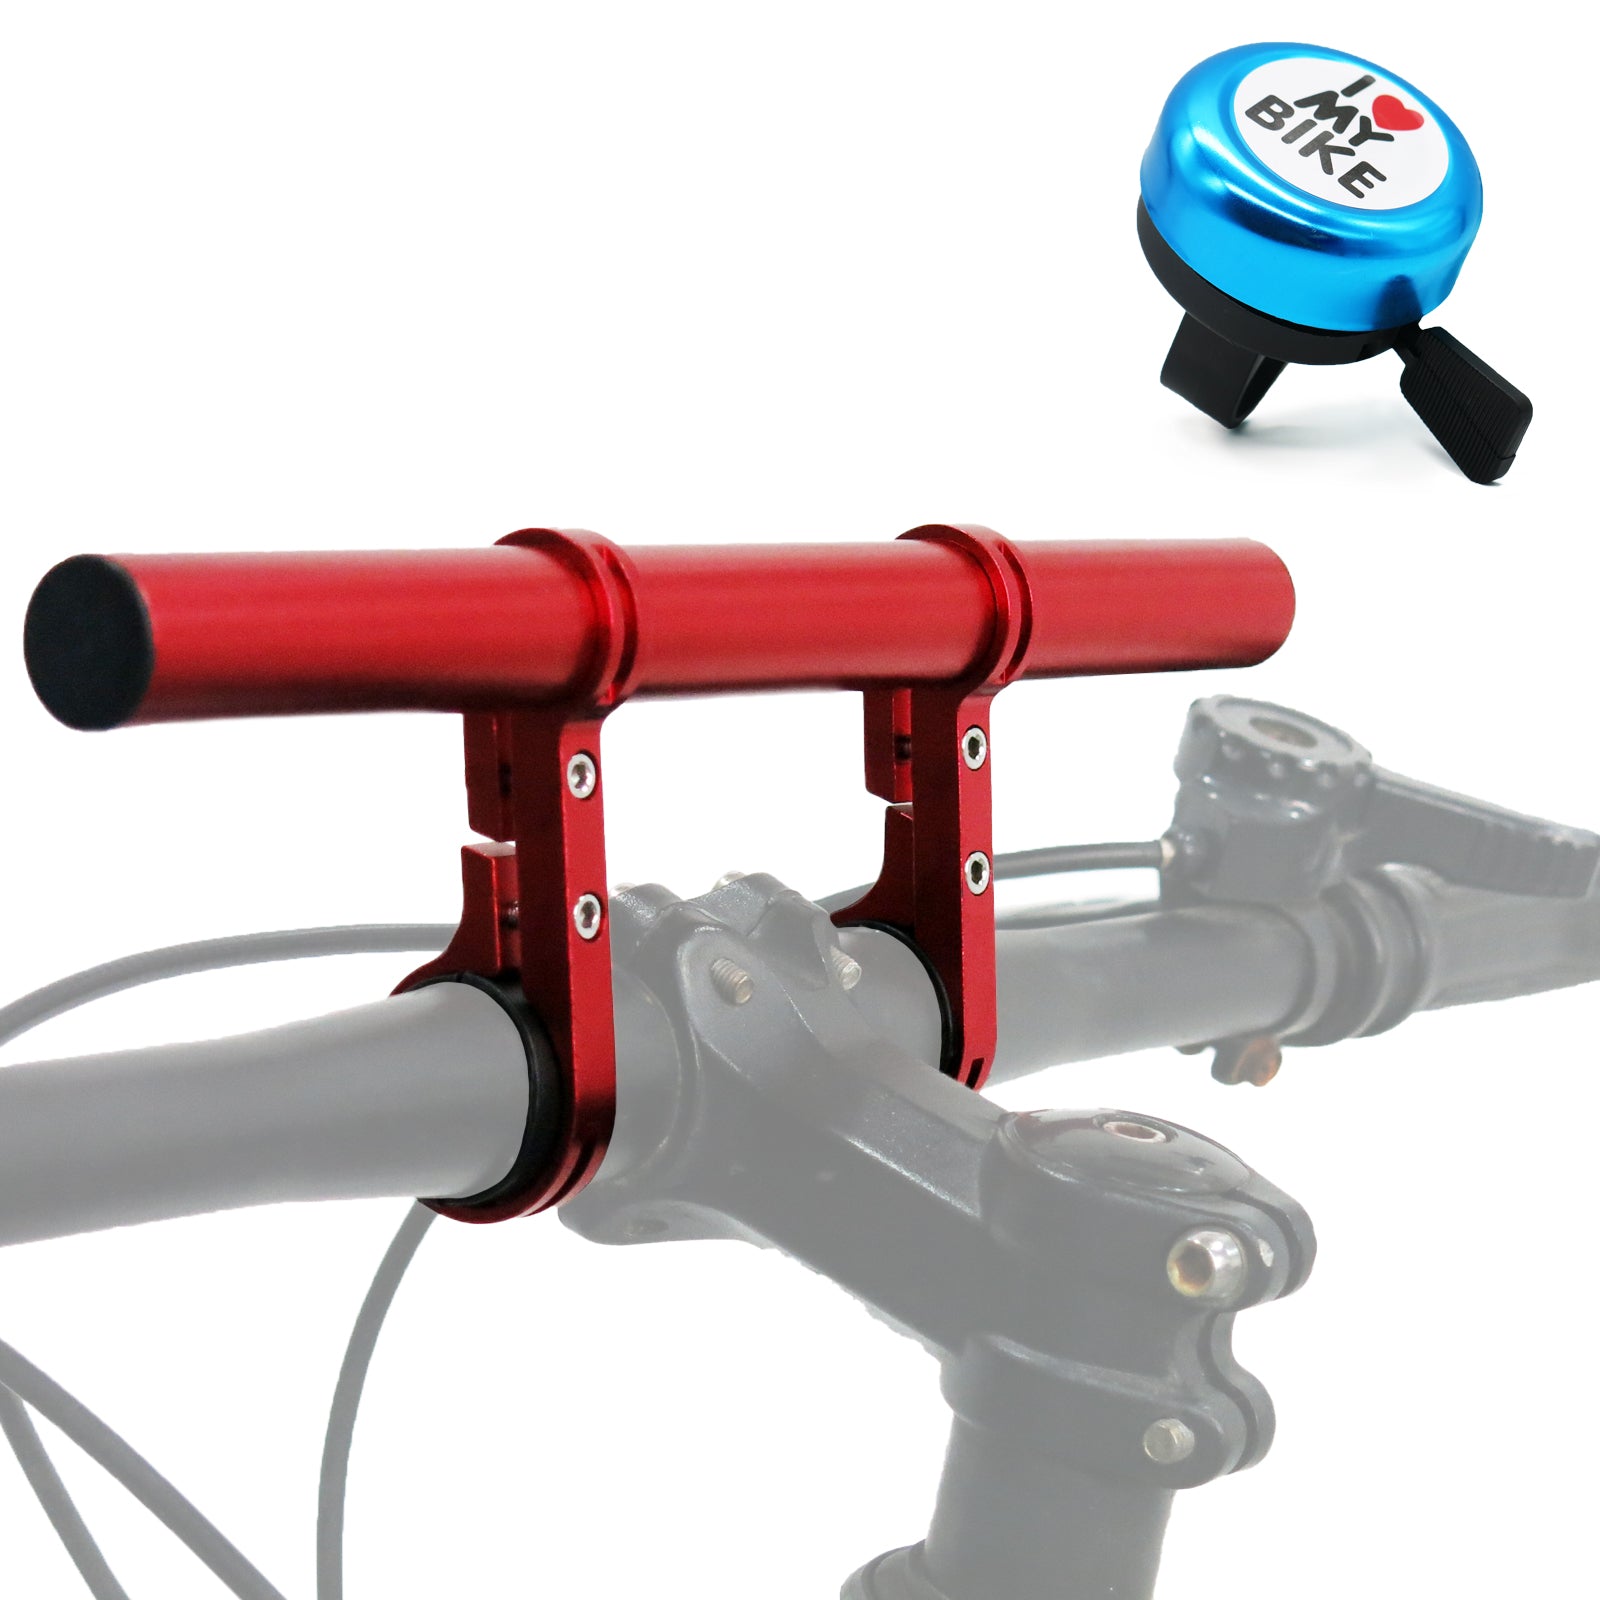 Smabike Bike Handlebar Extender, Aluminium Alloy Bike Handlebar Extension, for Phone Holder, Speedometers, Power Bank, Light, Bell